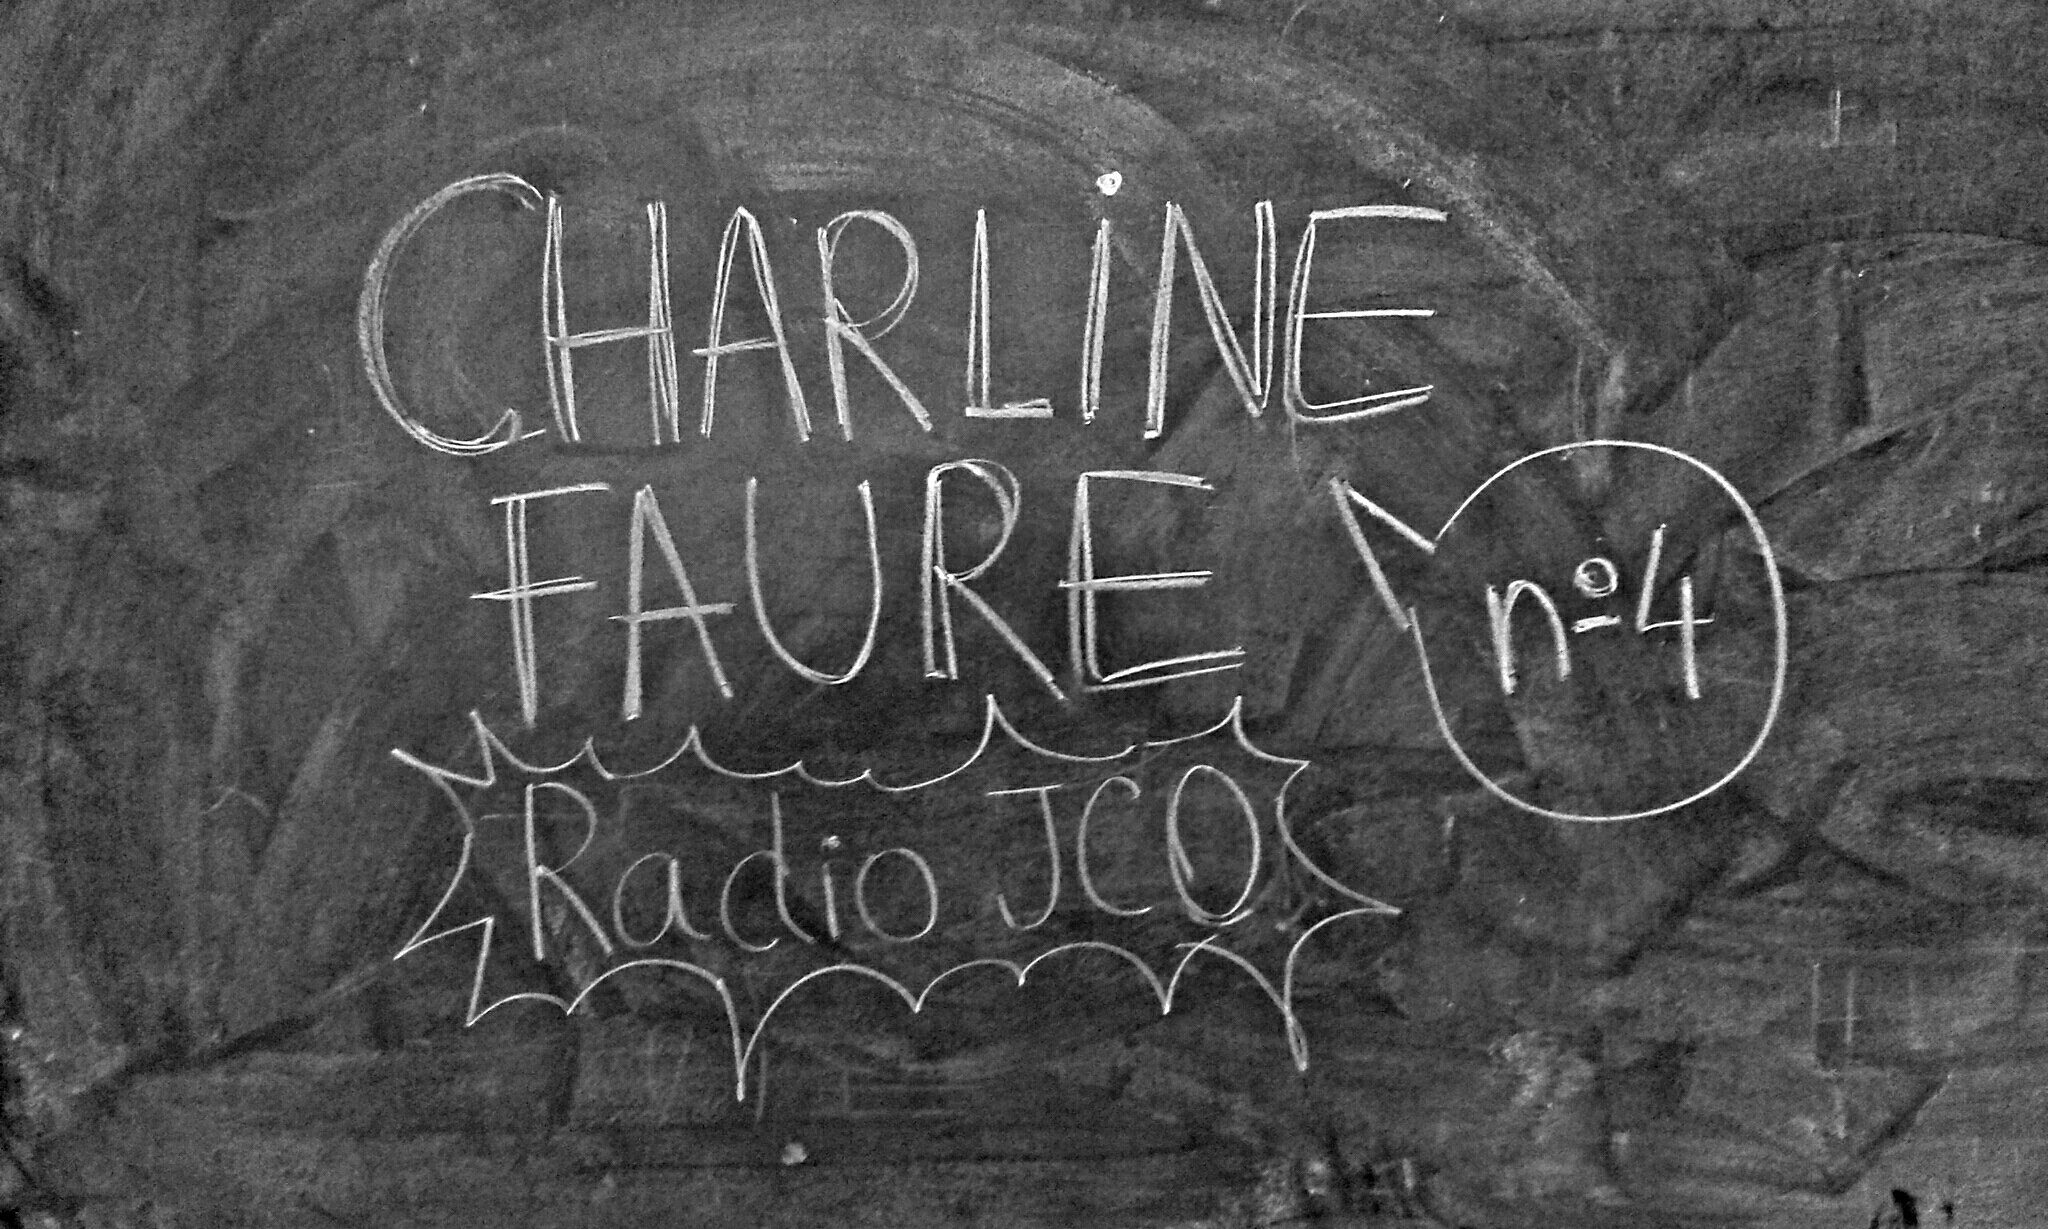 Radio JCO / Emission n°4 : Charline, mission conférence